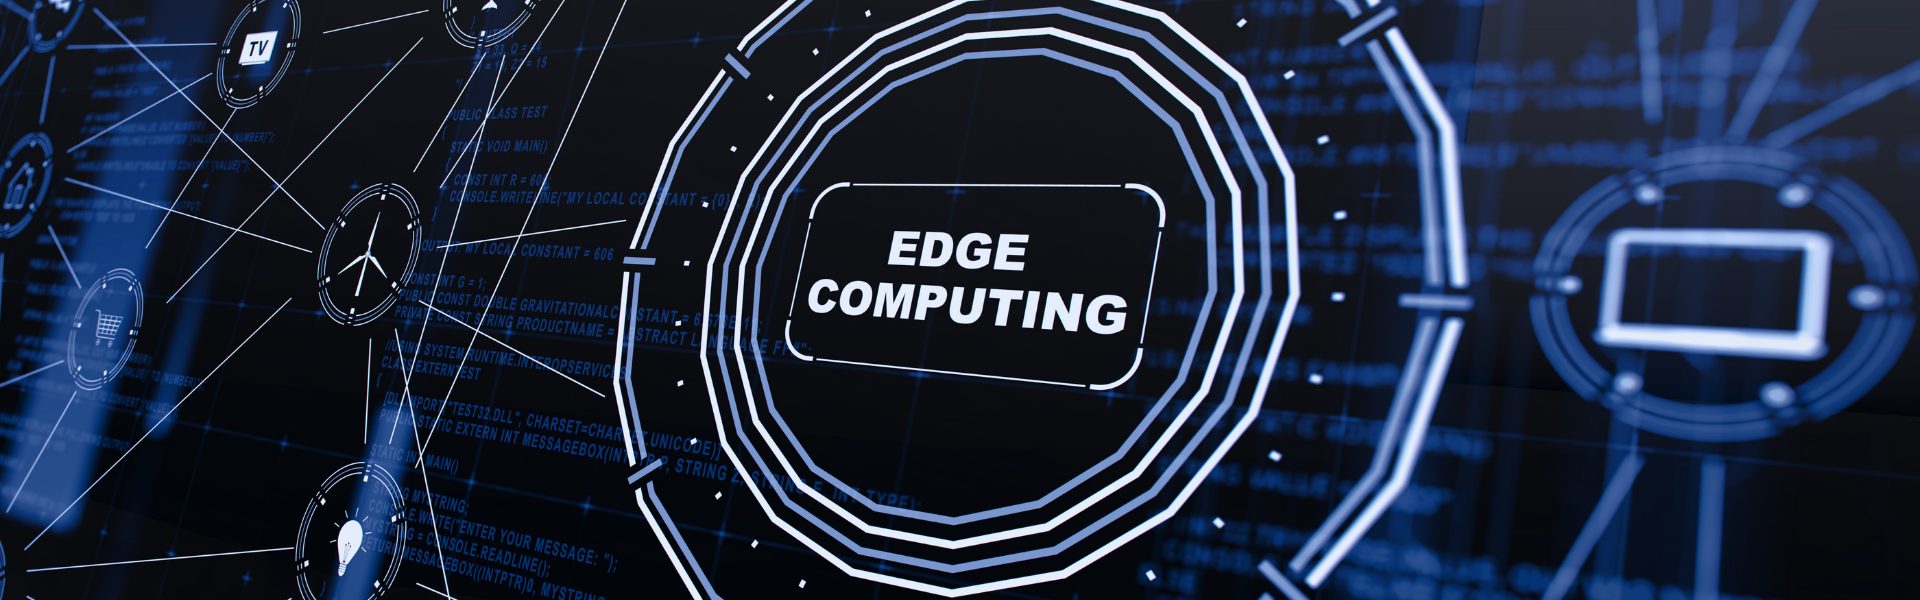 Basics on Edge Computing & Comparisons to Cloud - Simply NUC - edge computing - edge pc - edge computing hardware - edge computing solutions